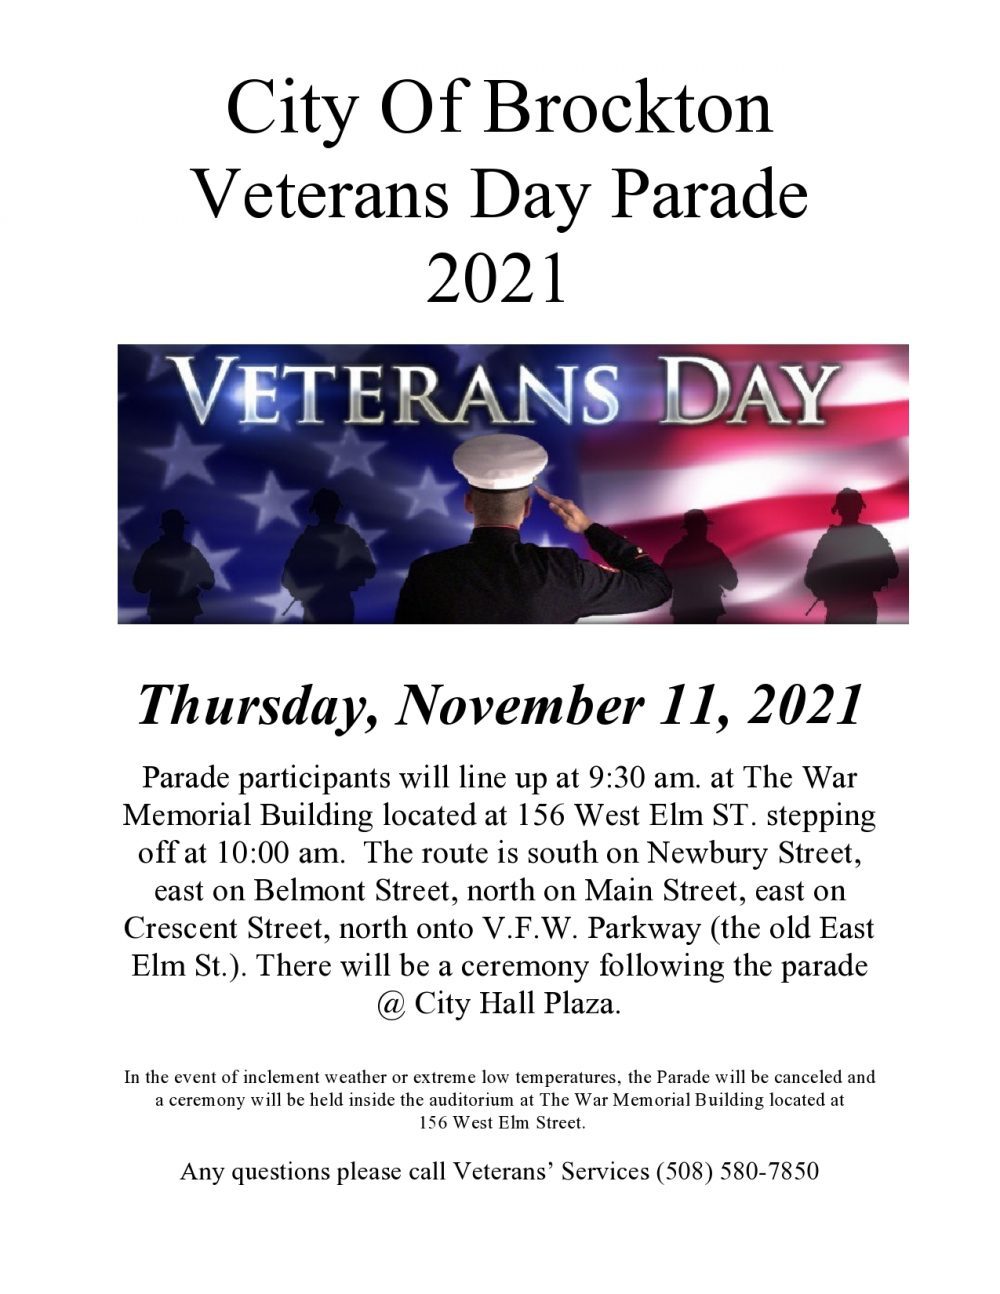 City of Brockton Veterans Day Parade November 11, 2021